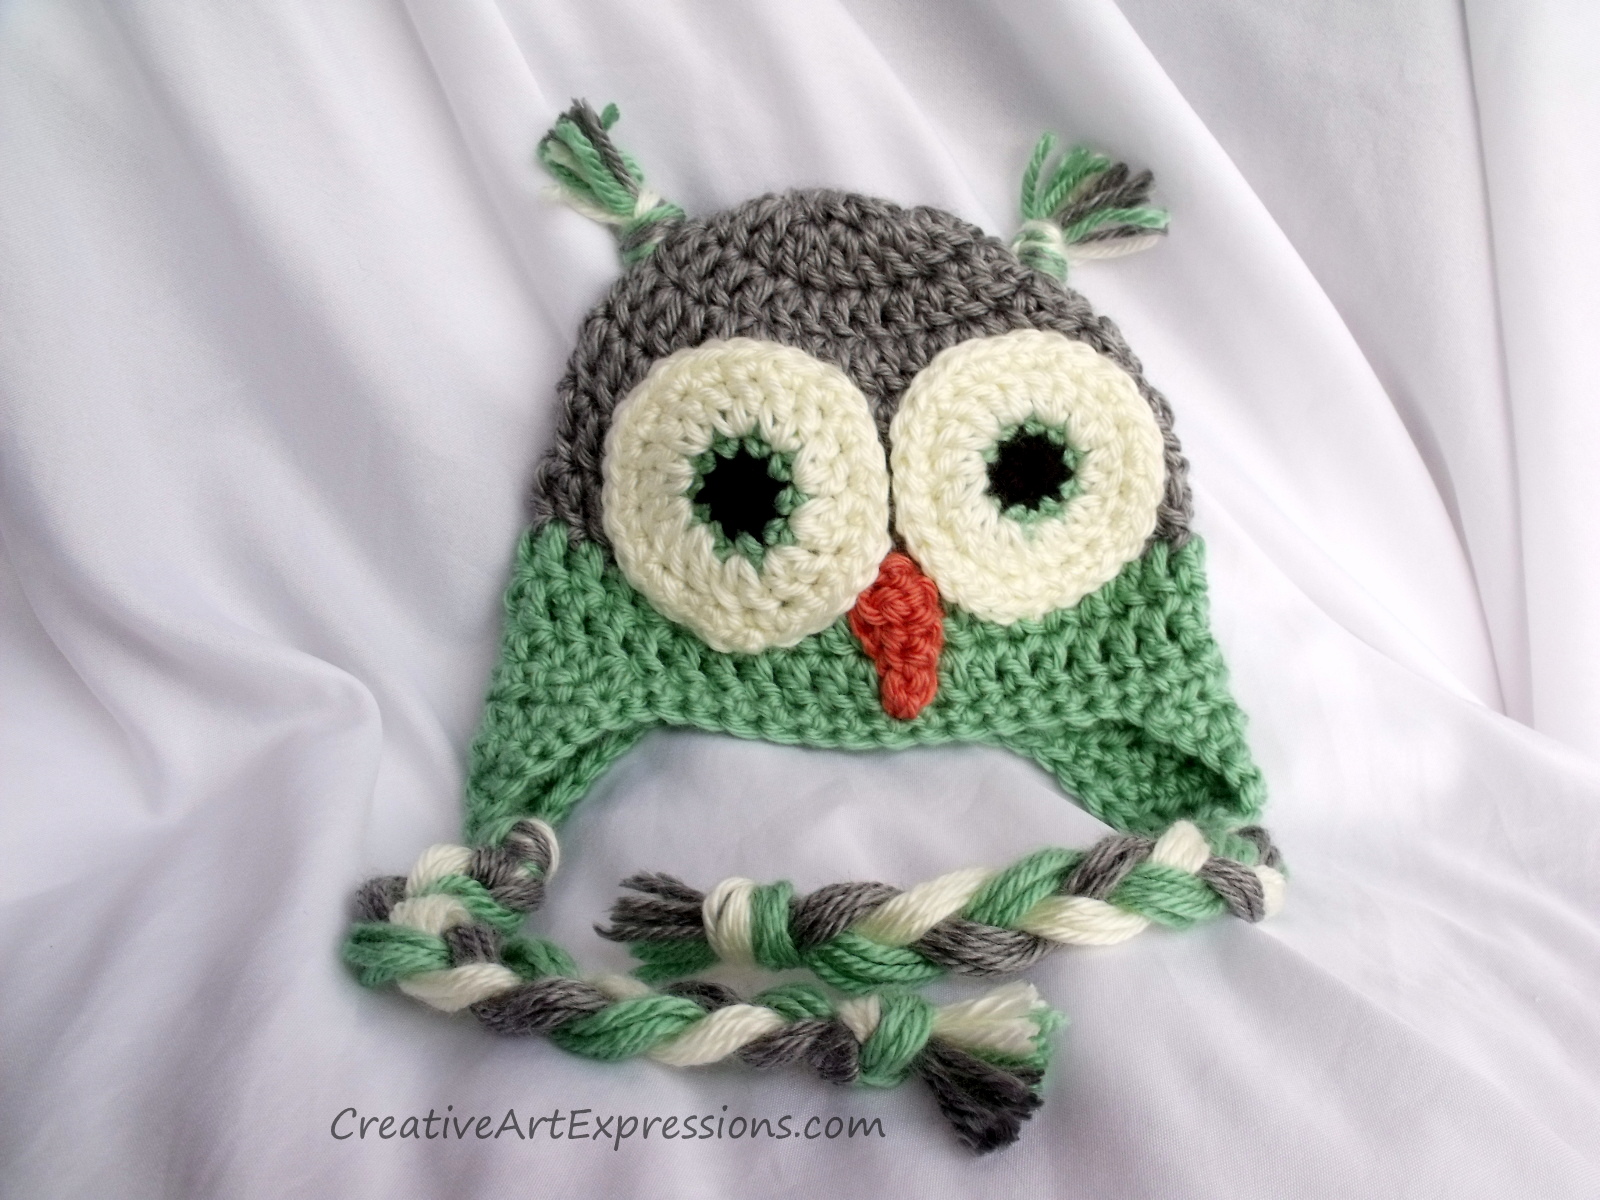 Creative Art Expressions Hand Crocheted Green & Gray Owl Newborn Hat